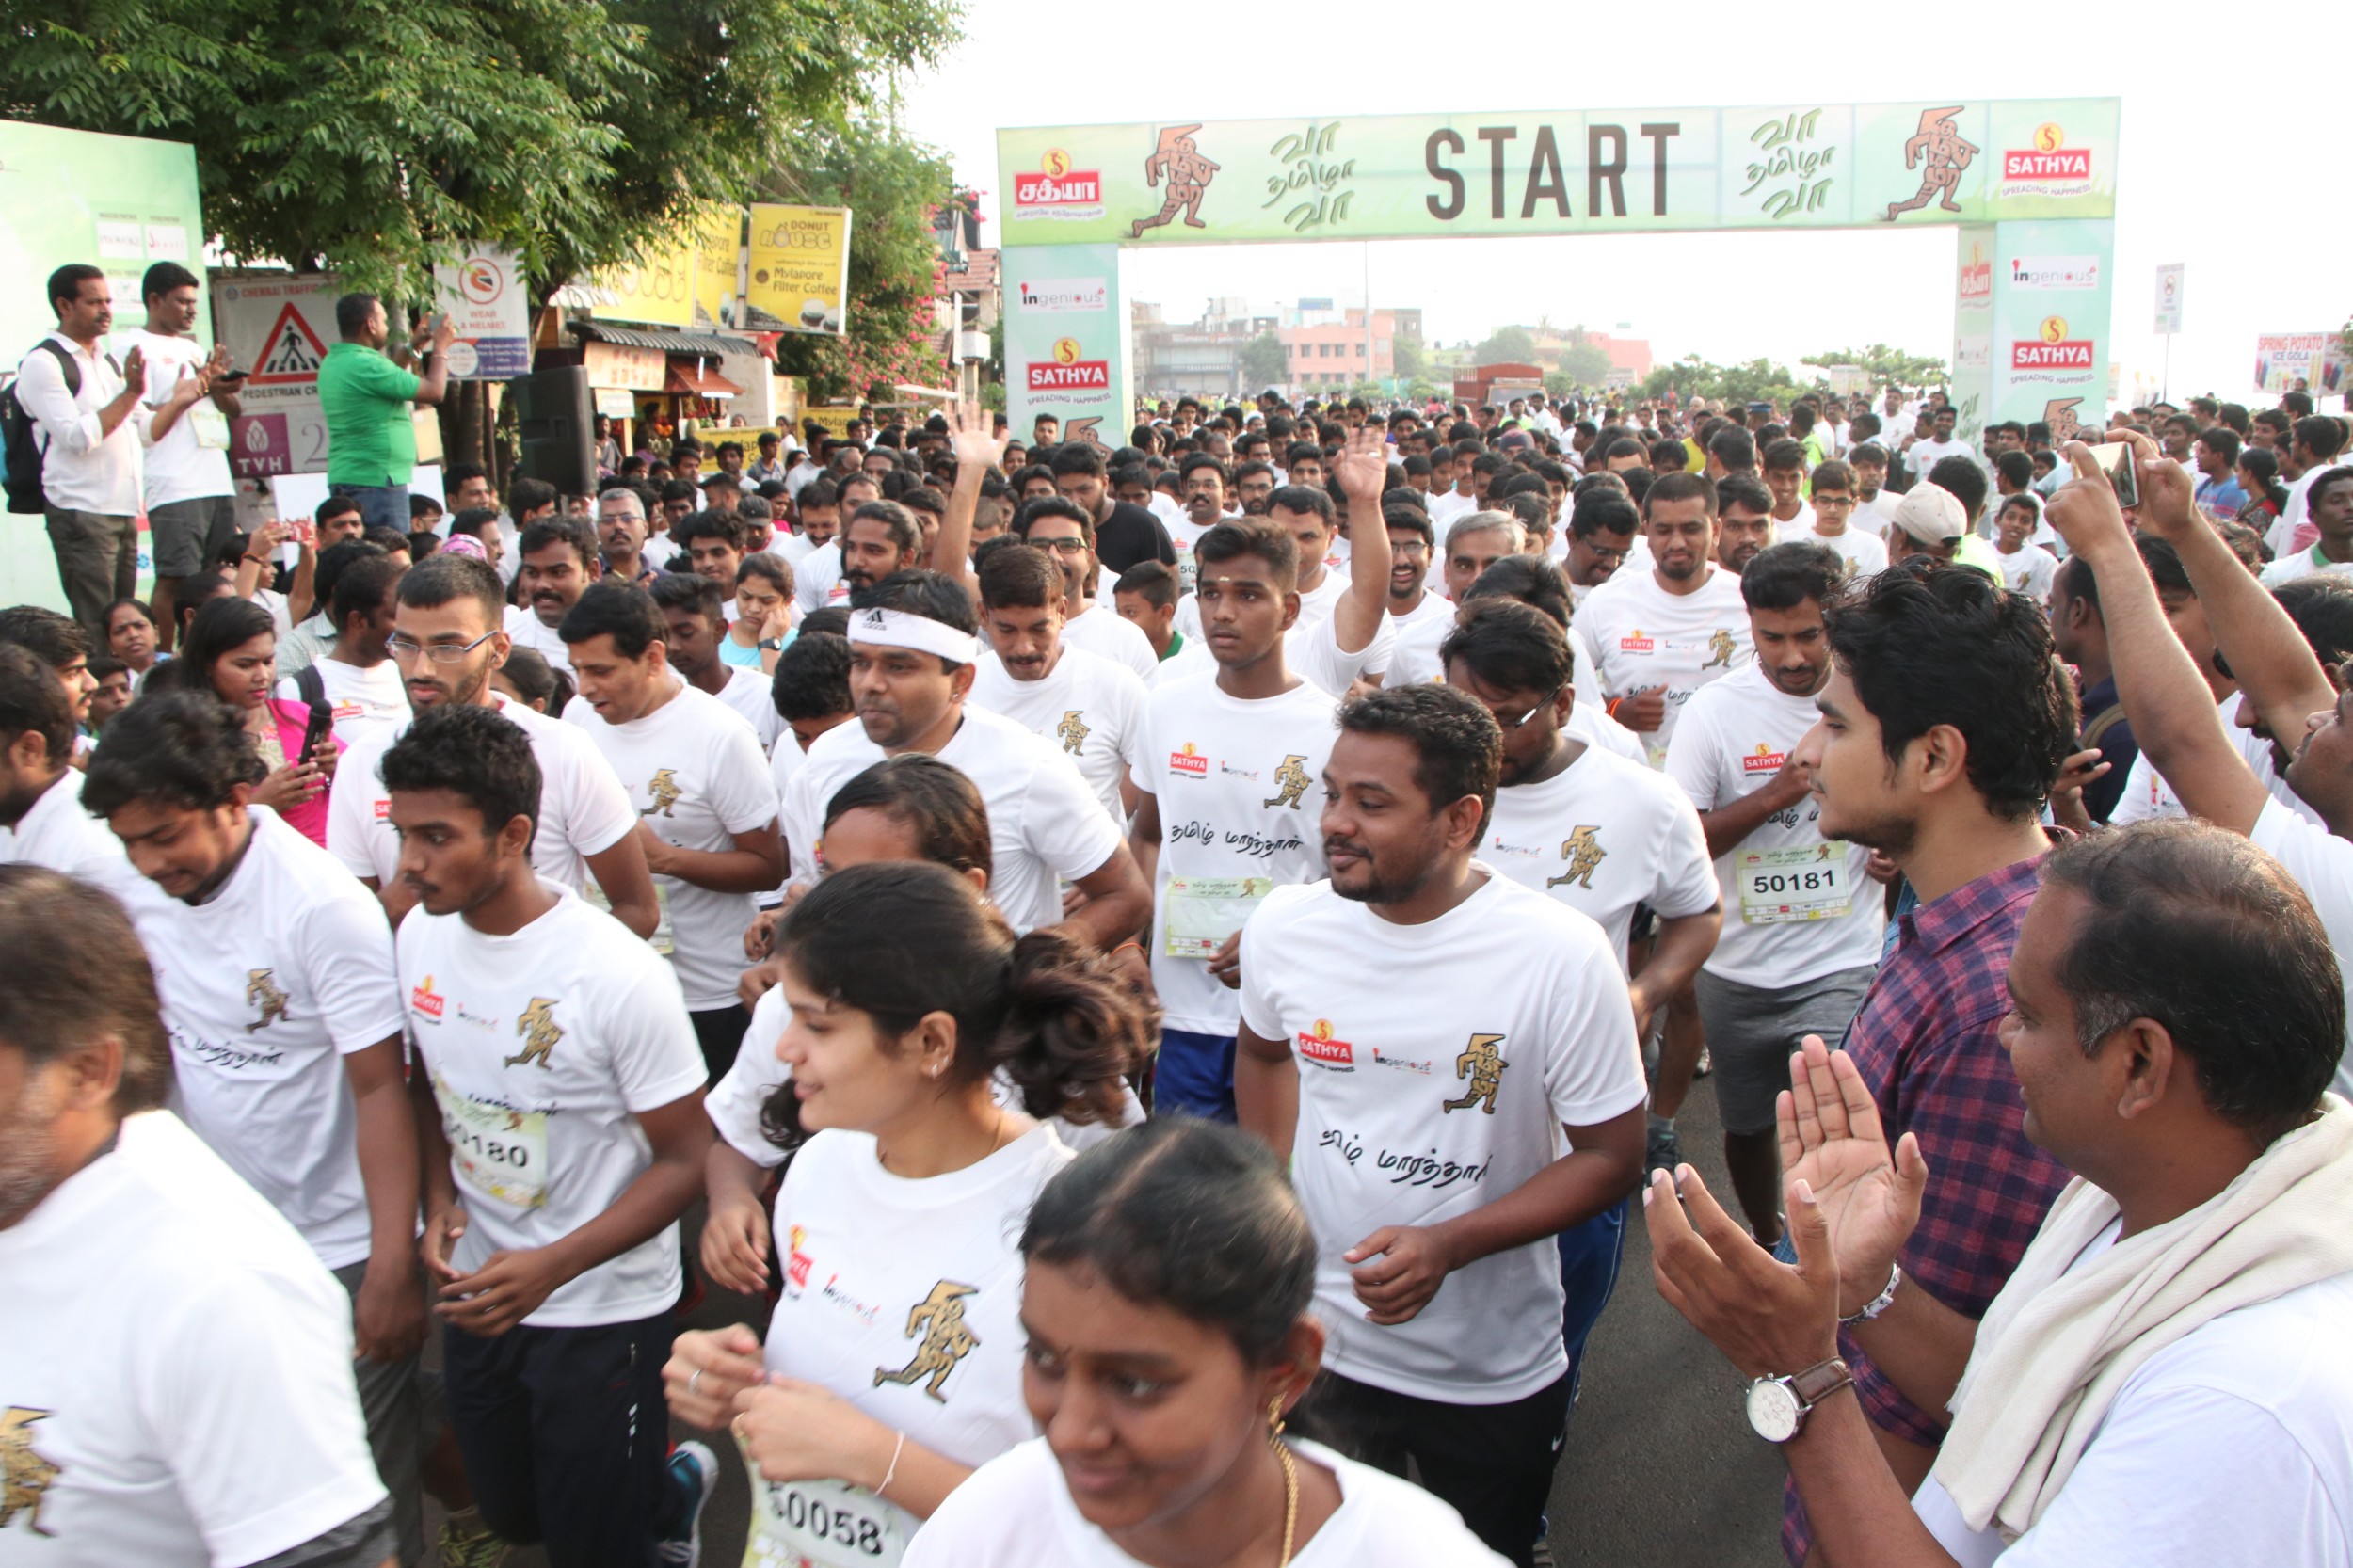 Marathon organized to promote Tamil culture